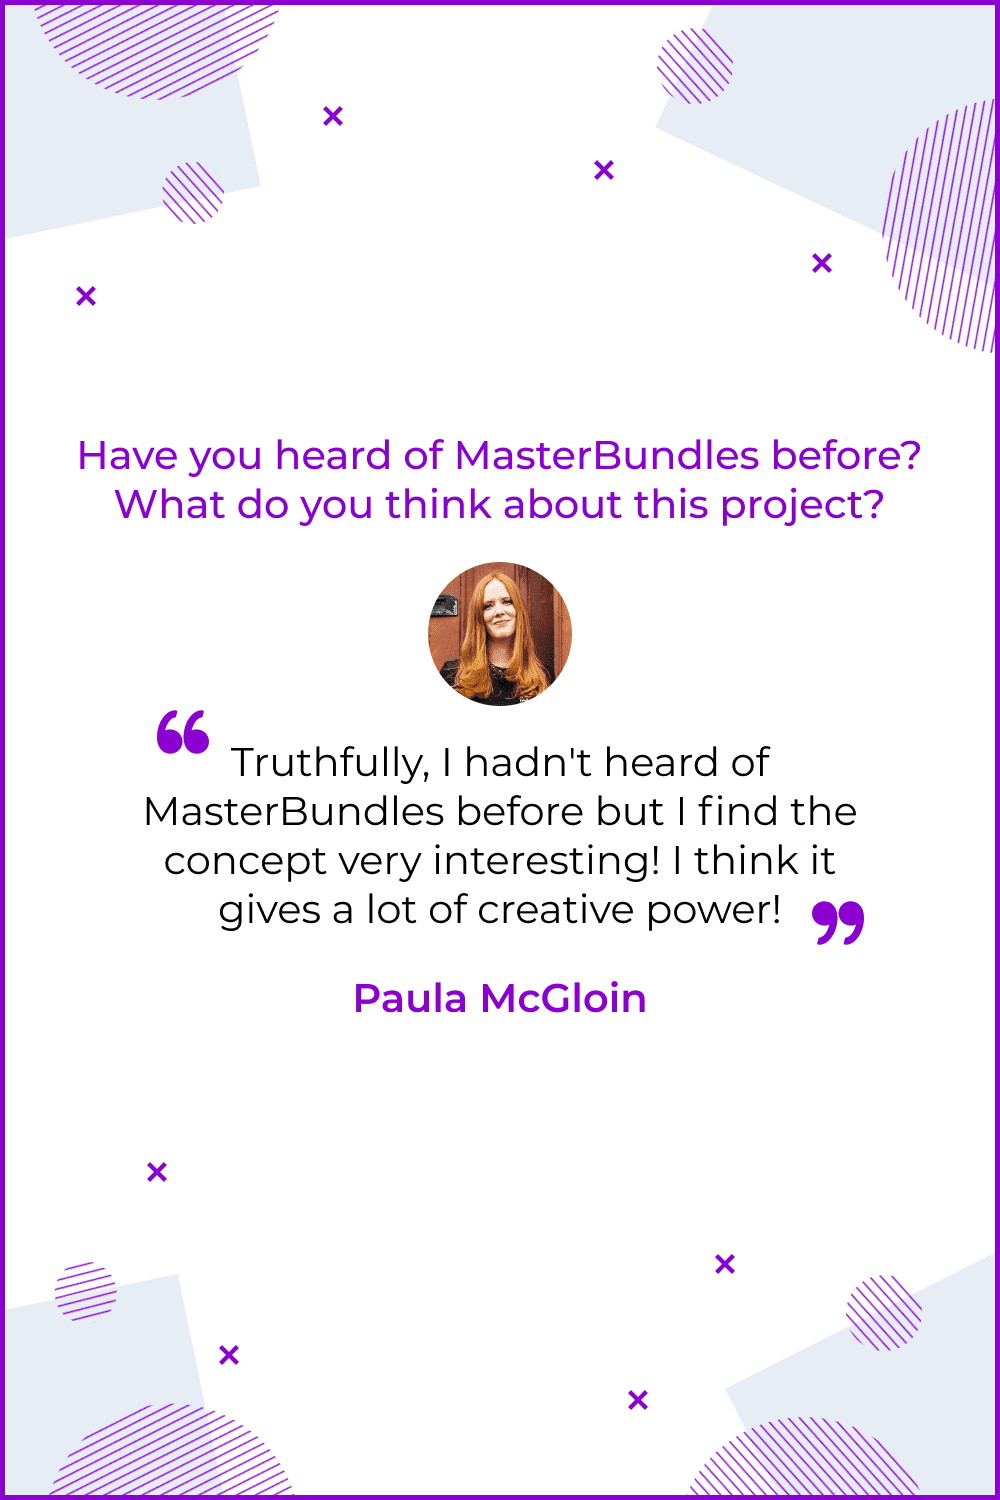 Paula McGloin quote.